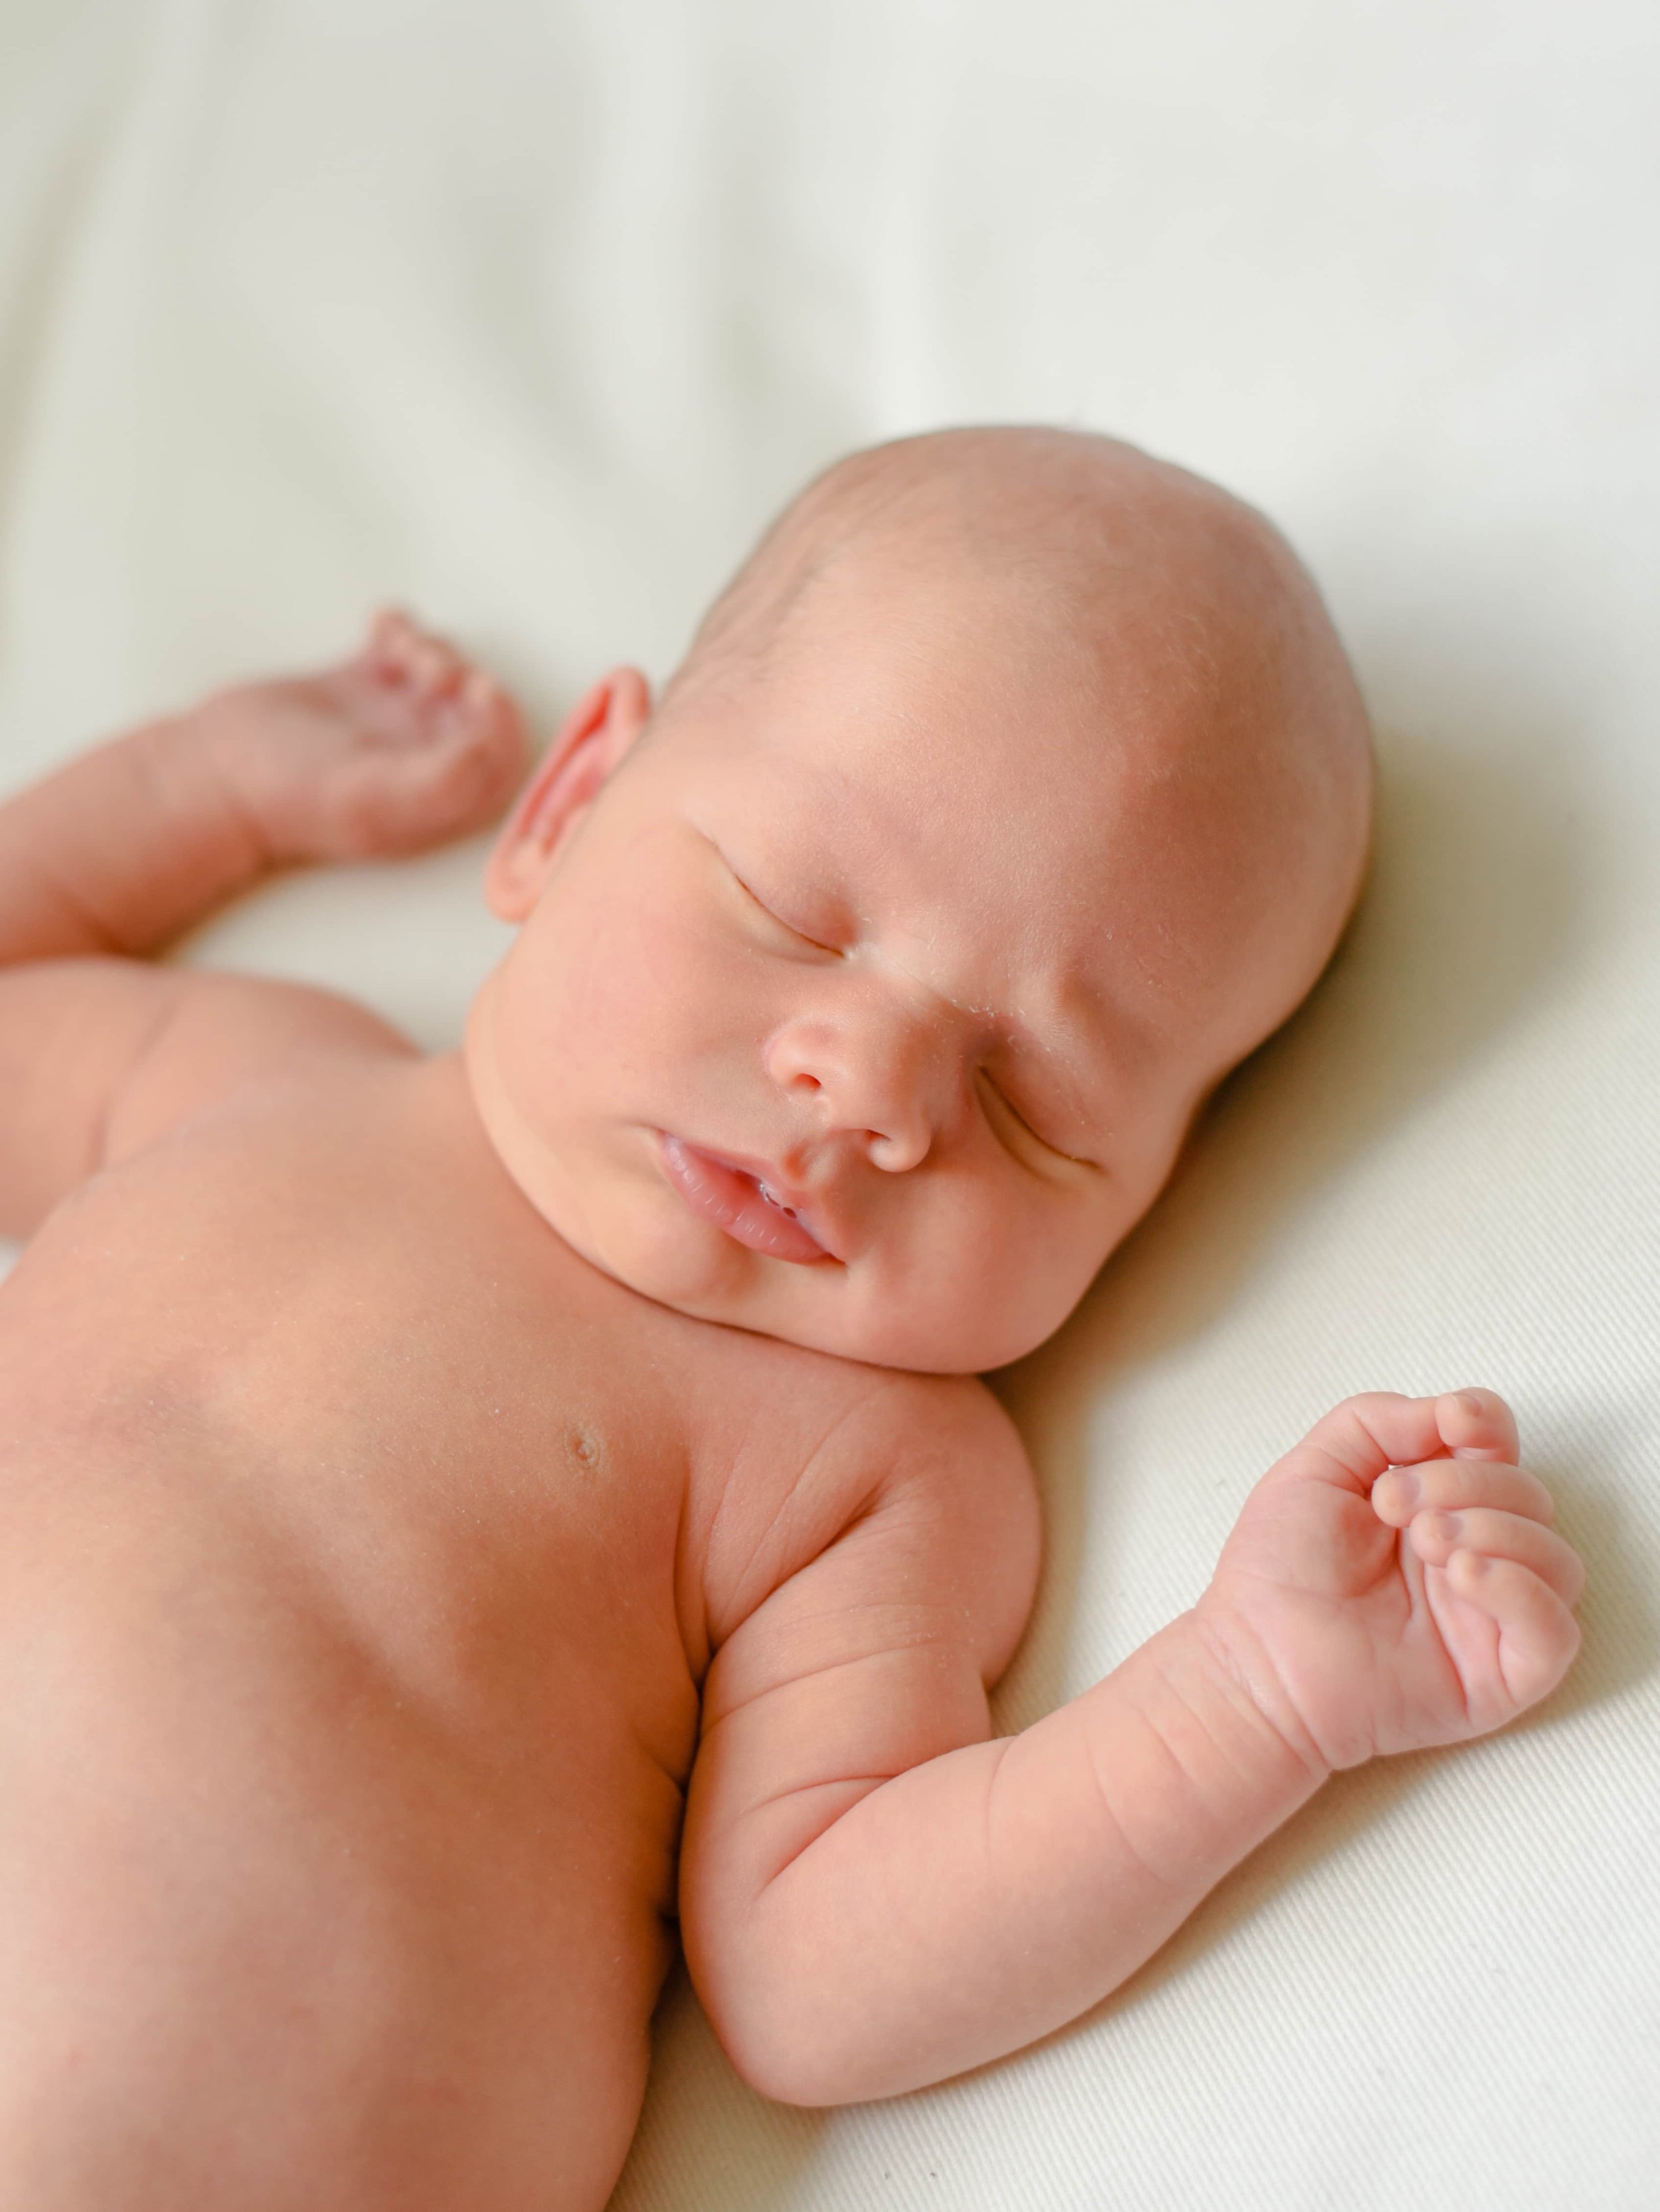 Unposed and natural newborn baby photo